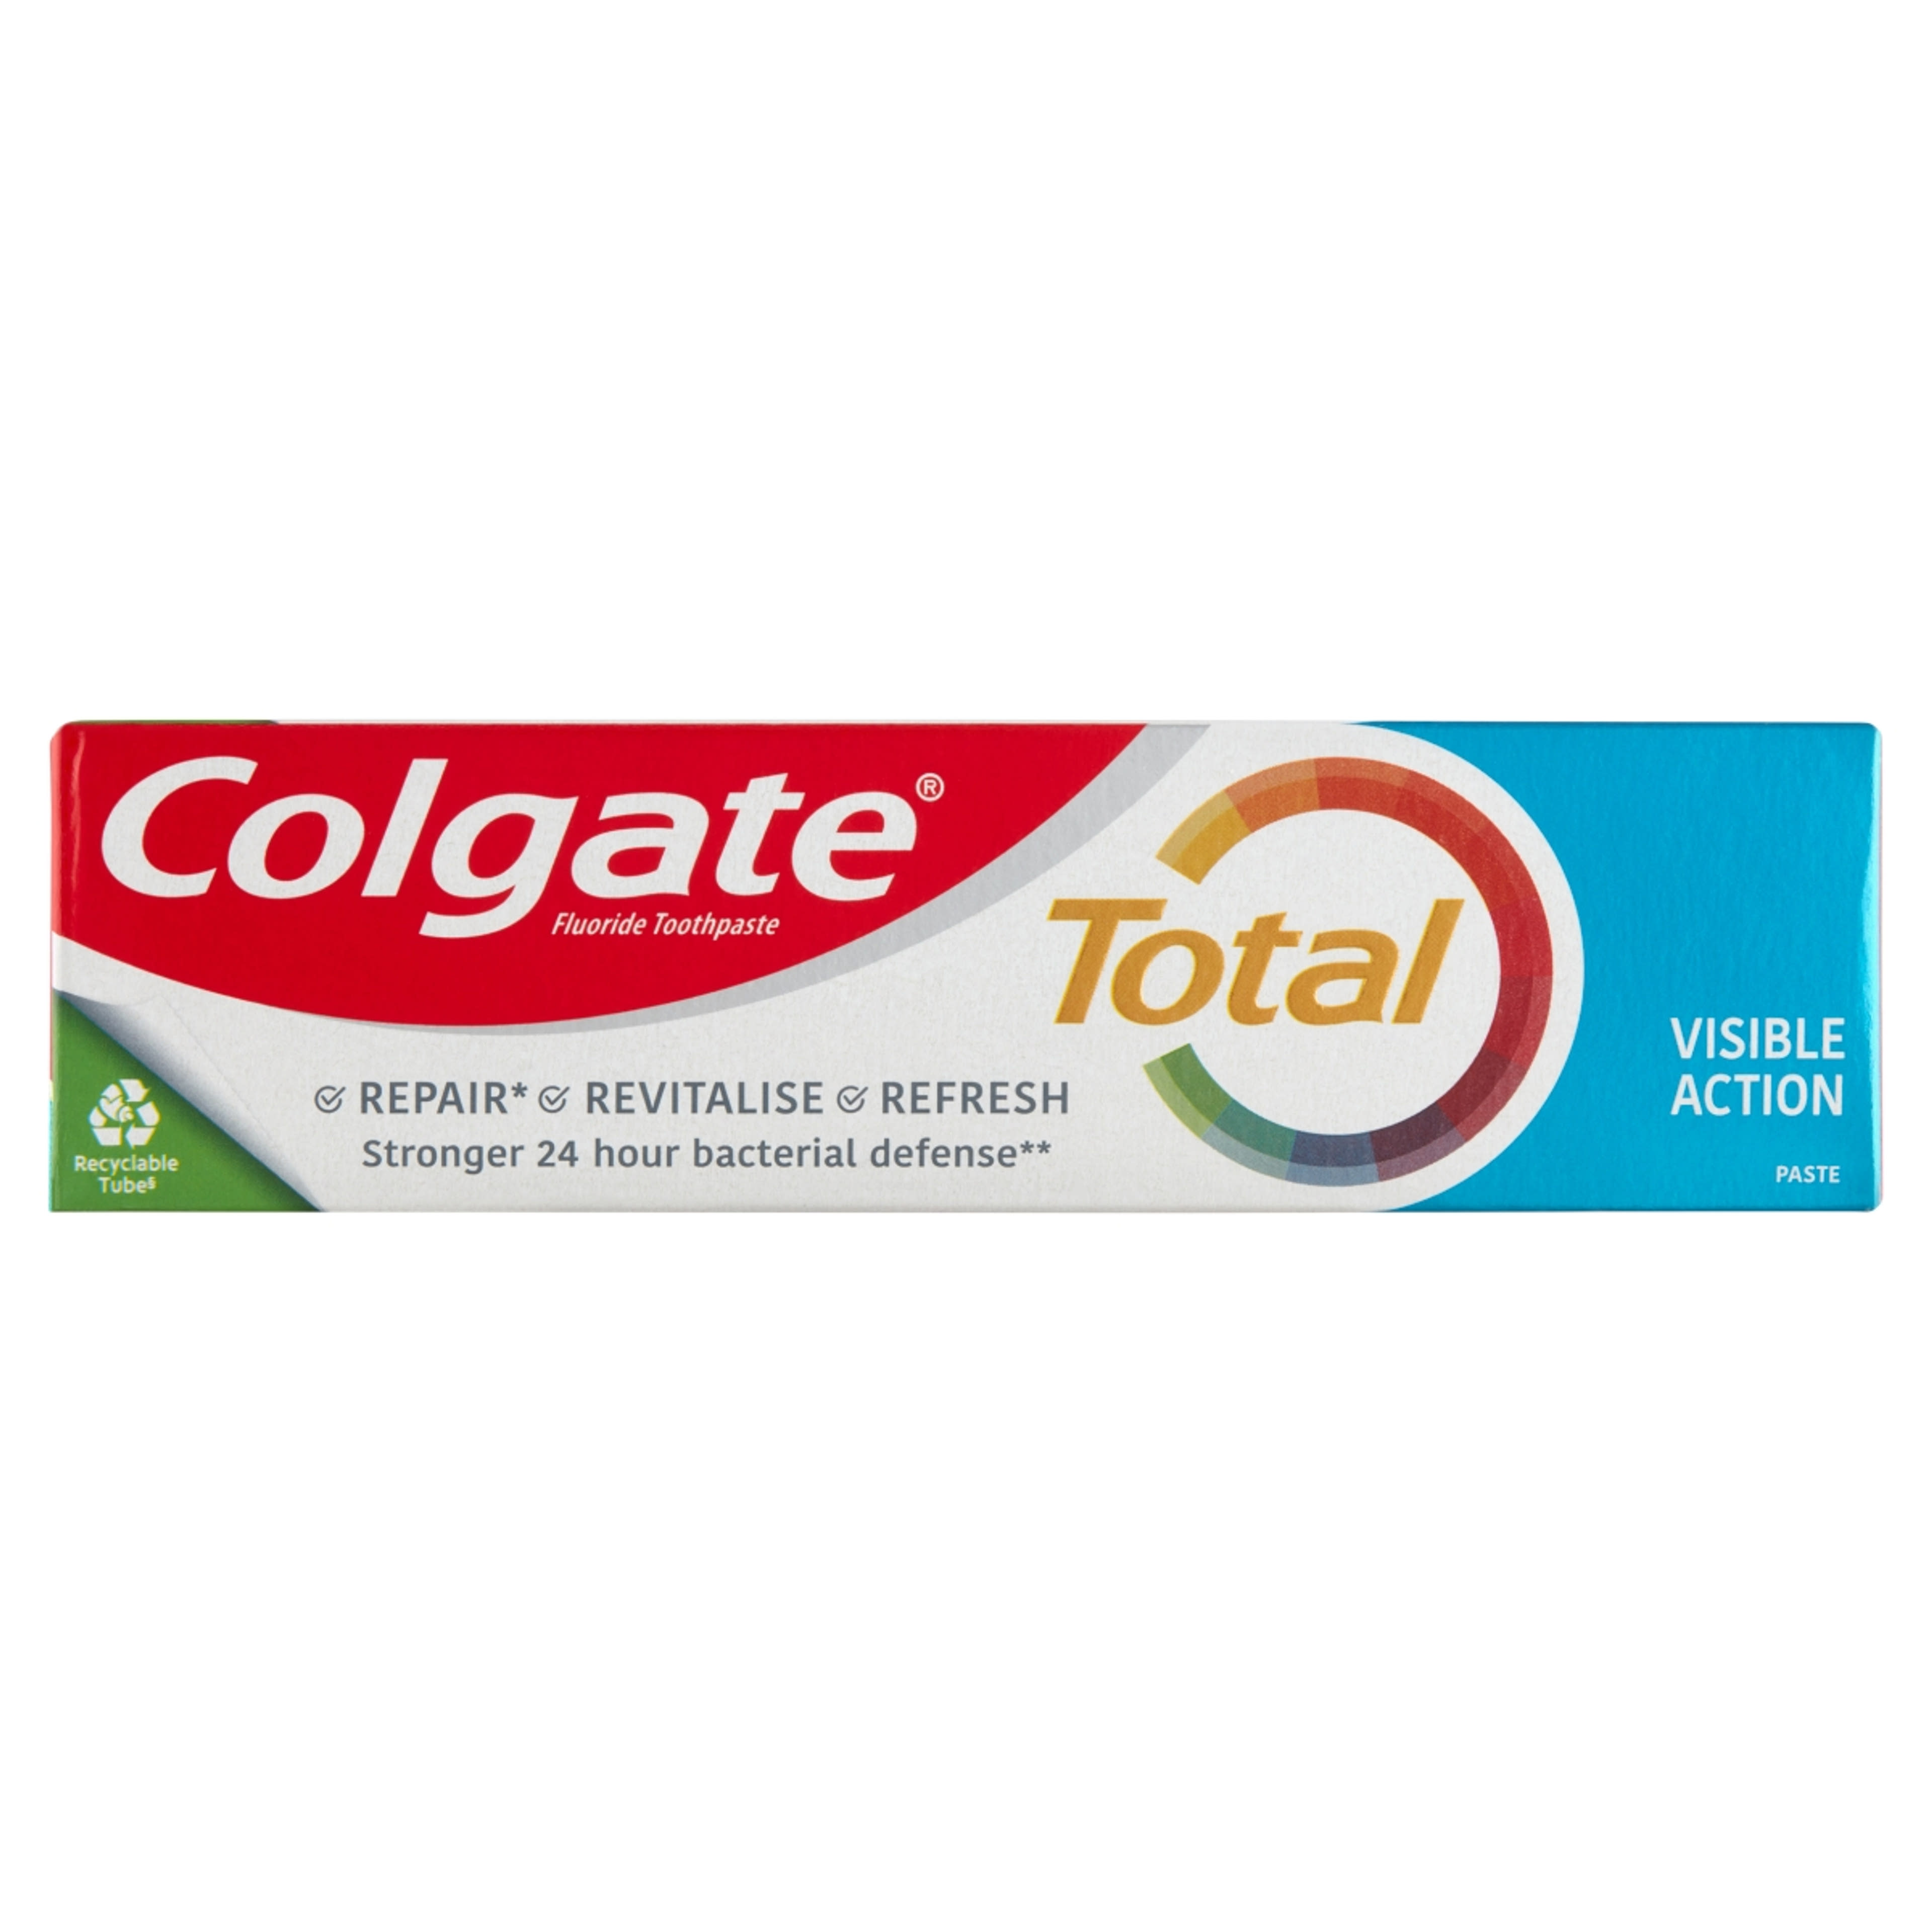 Colgate Total Visible Action fogkrém - 75 ml